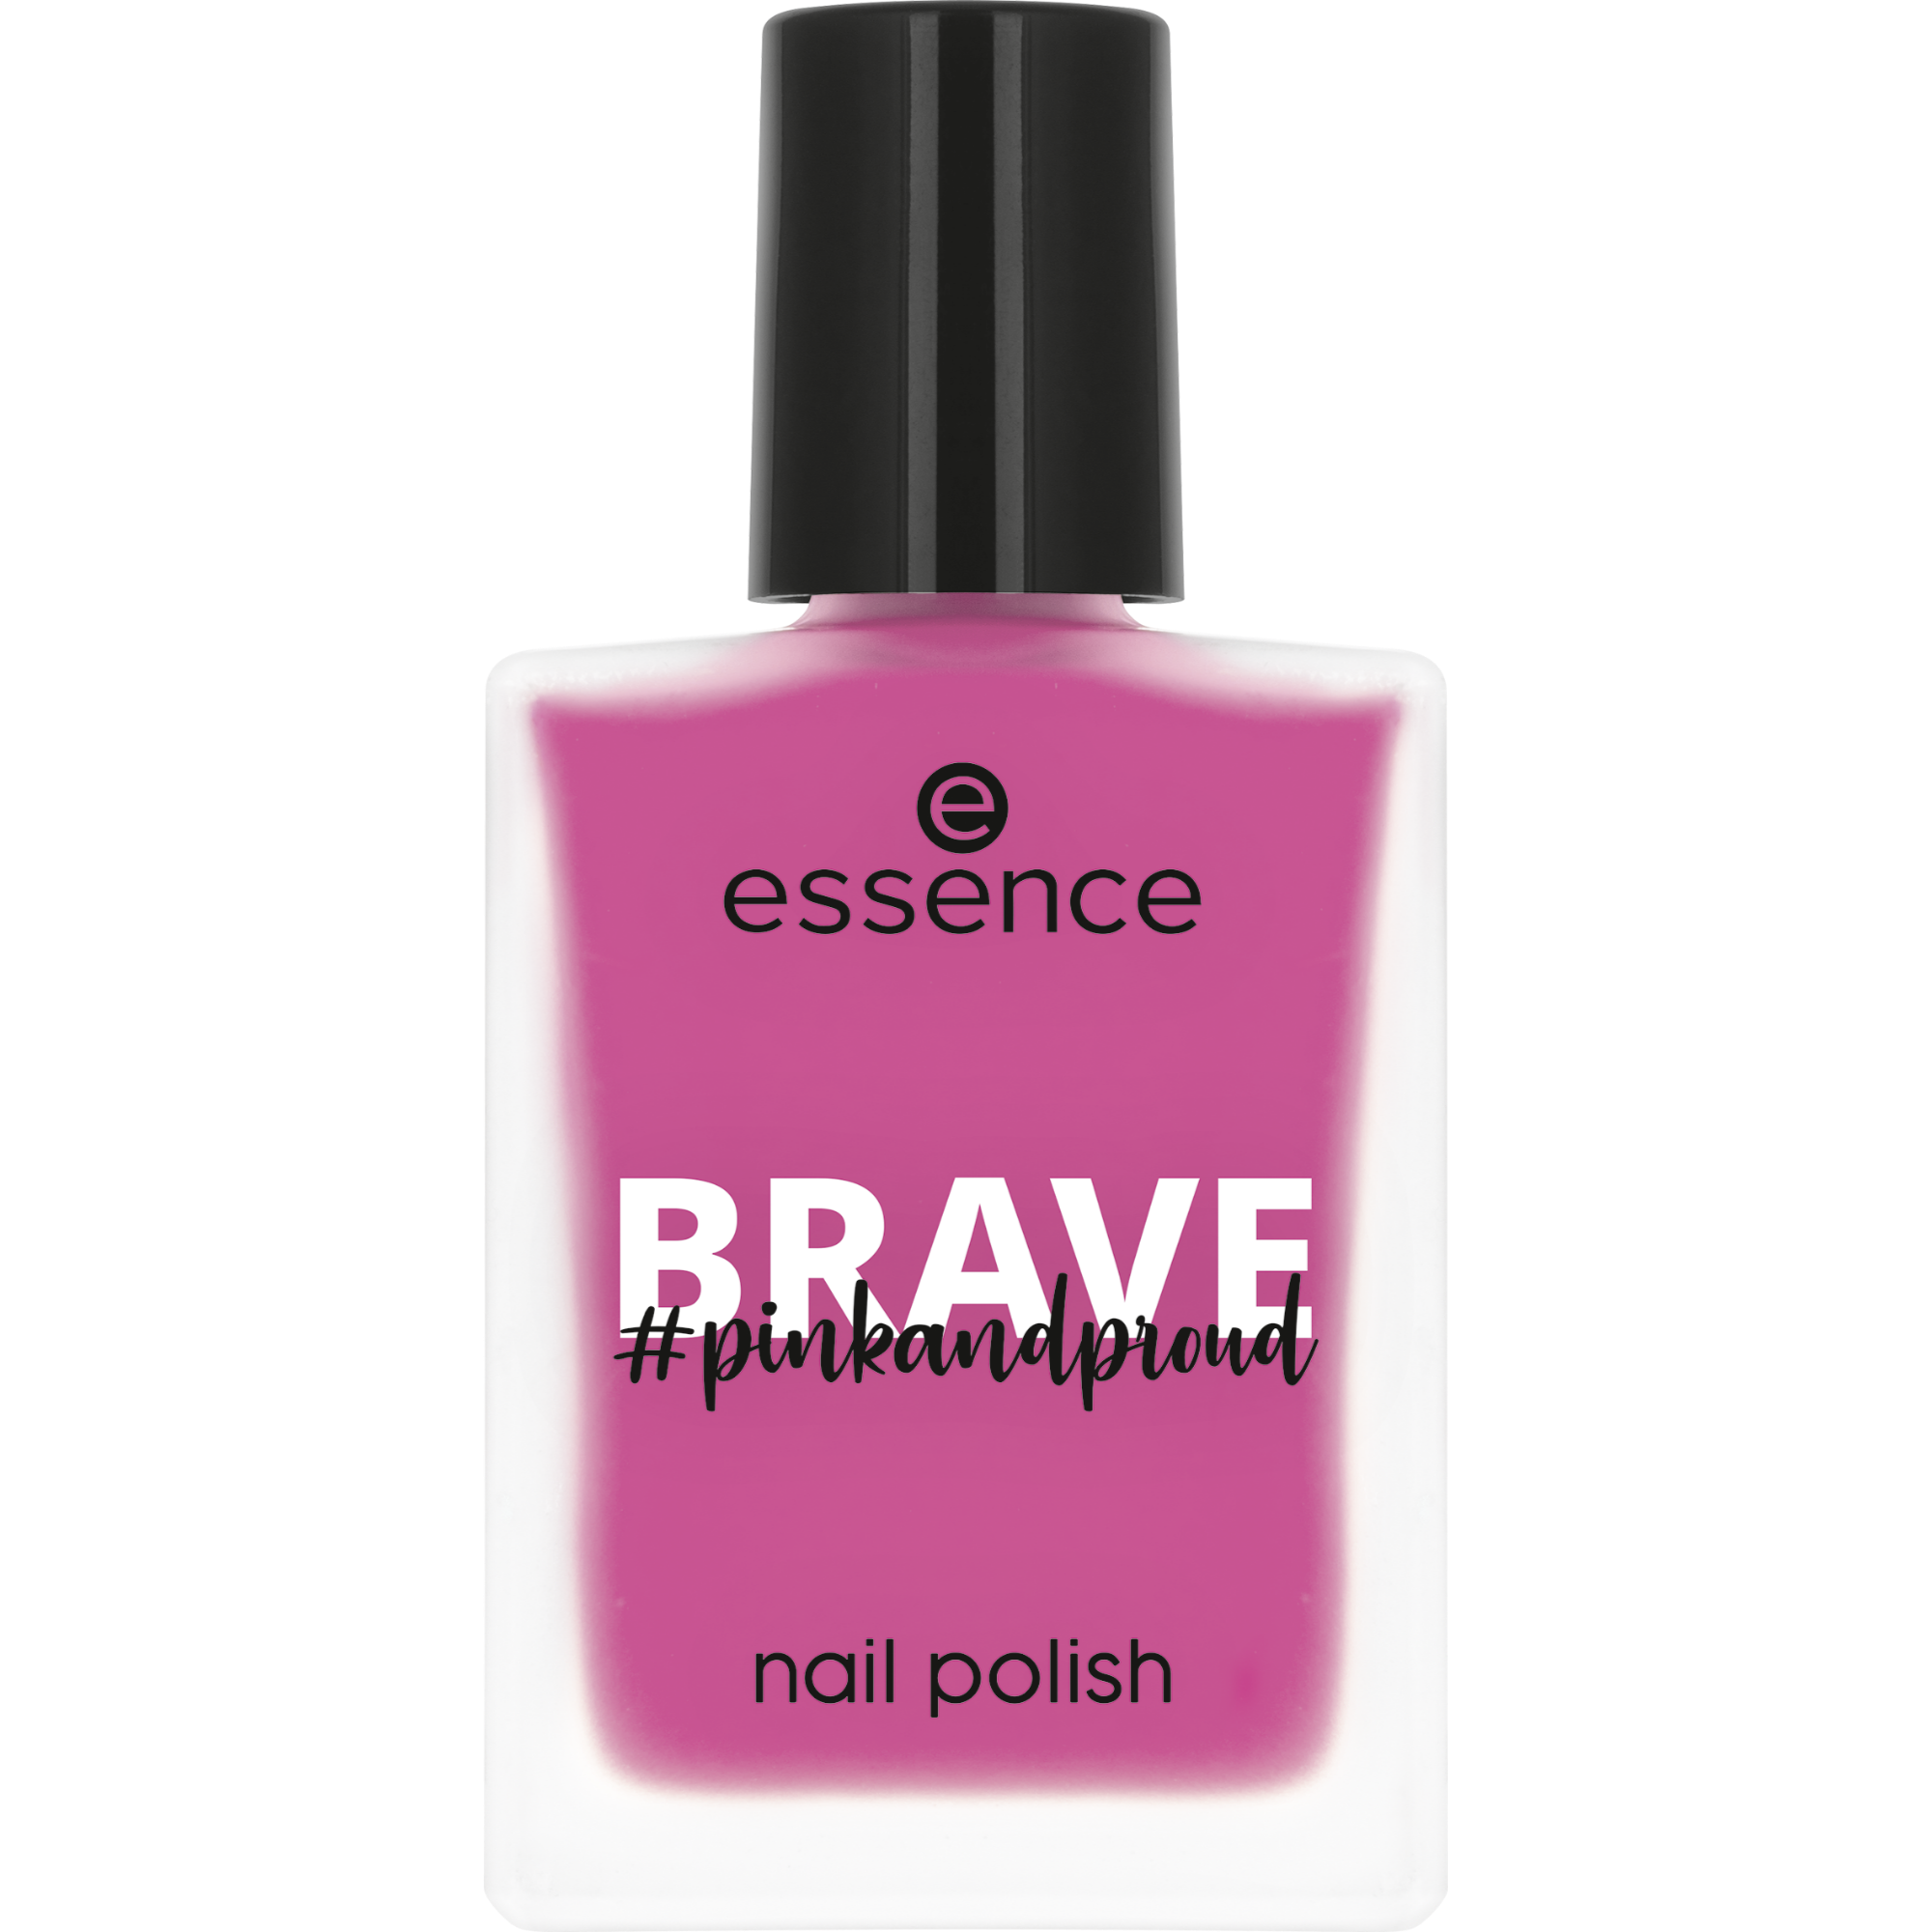 pinkandproud BRAVE nail polish